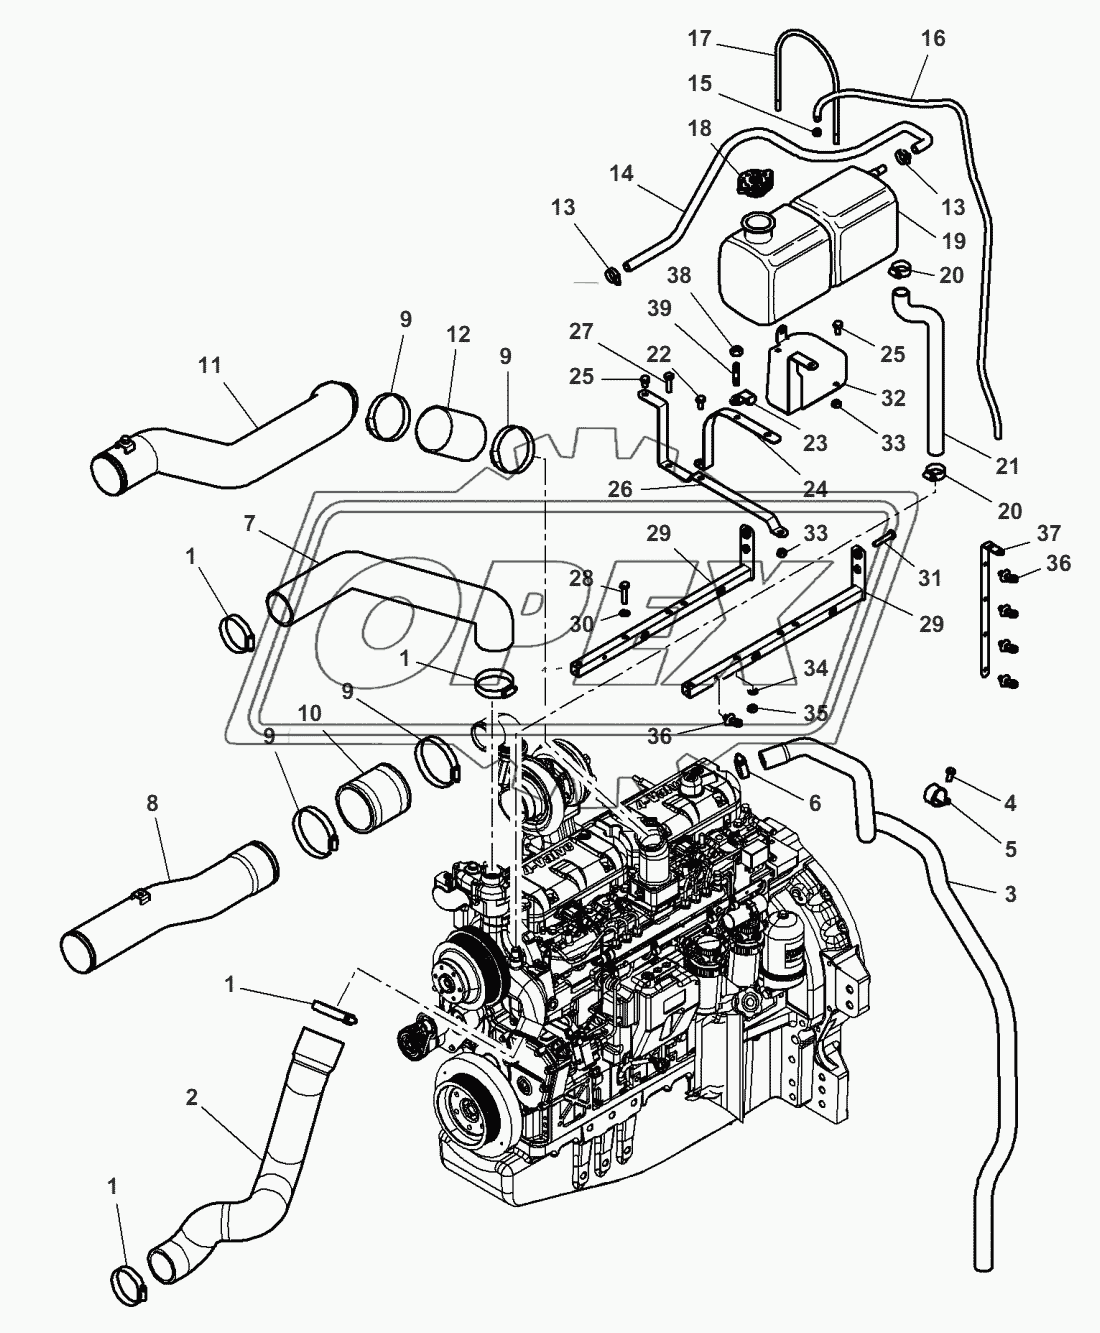 Cooling System - Engine 1